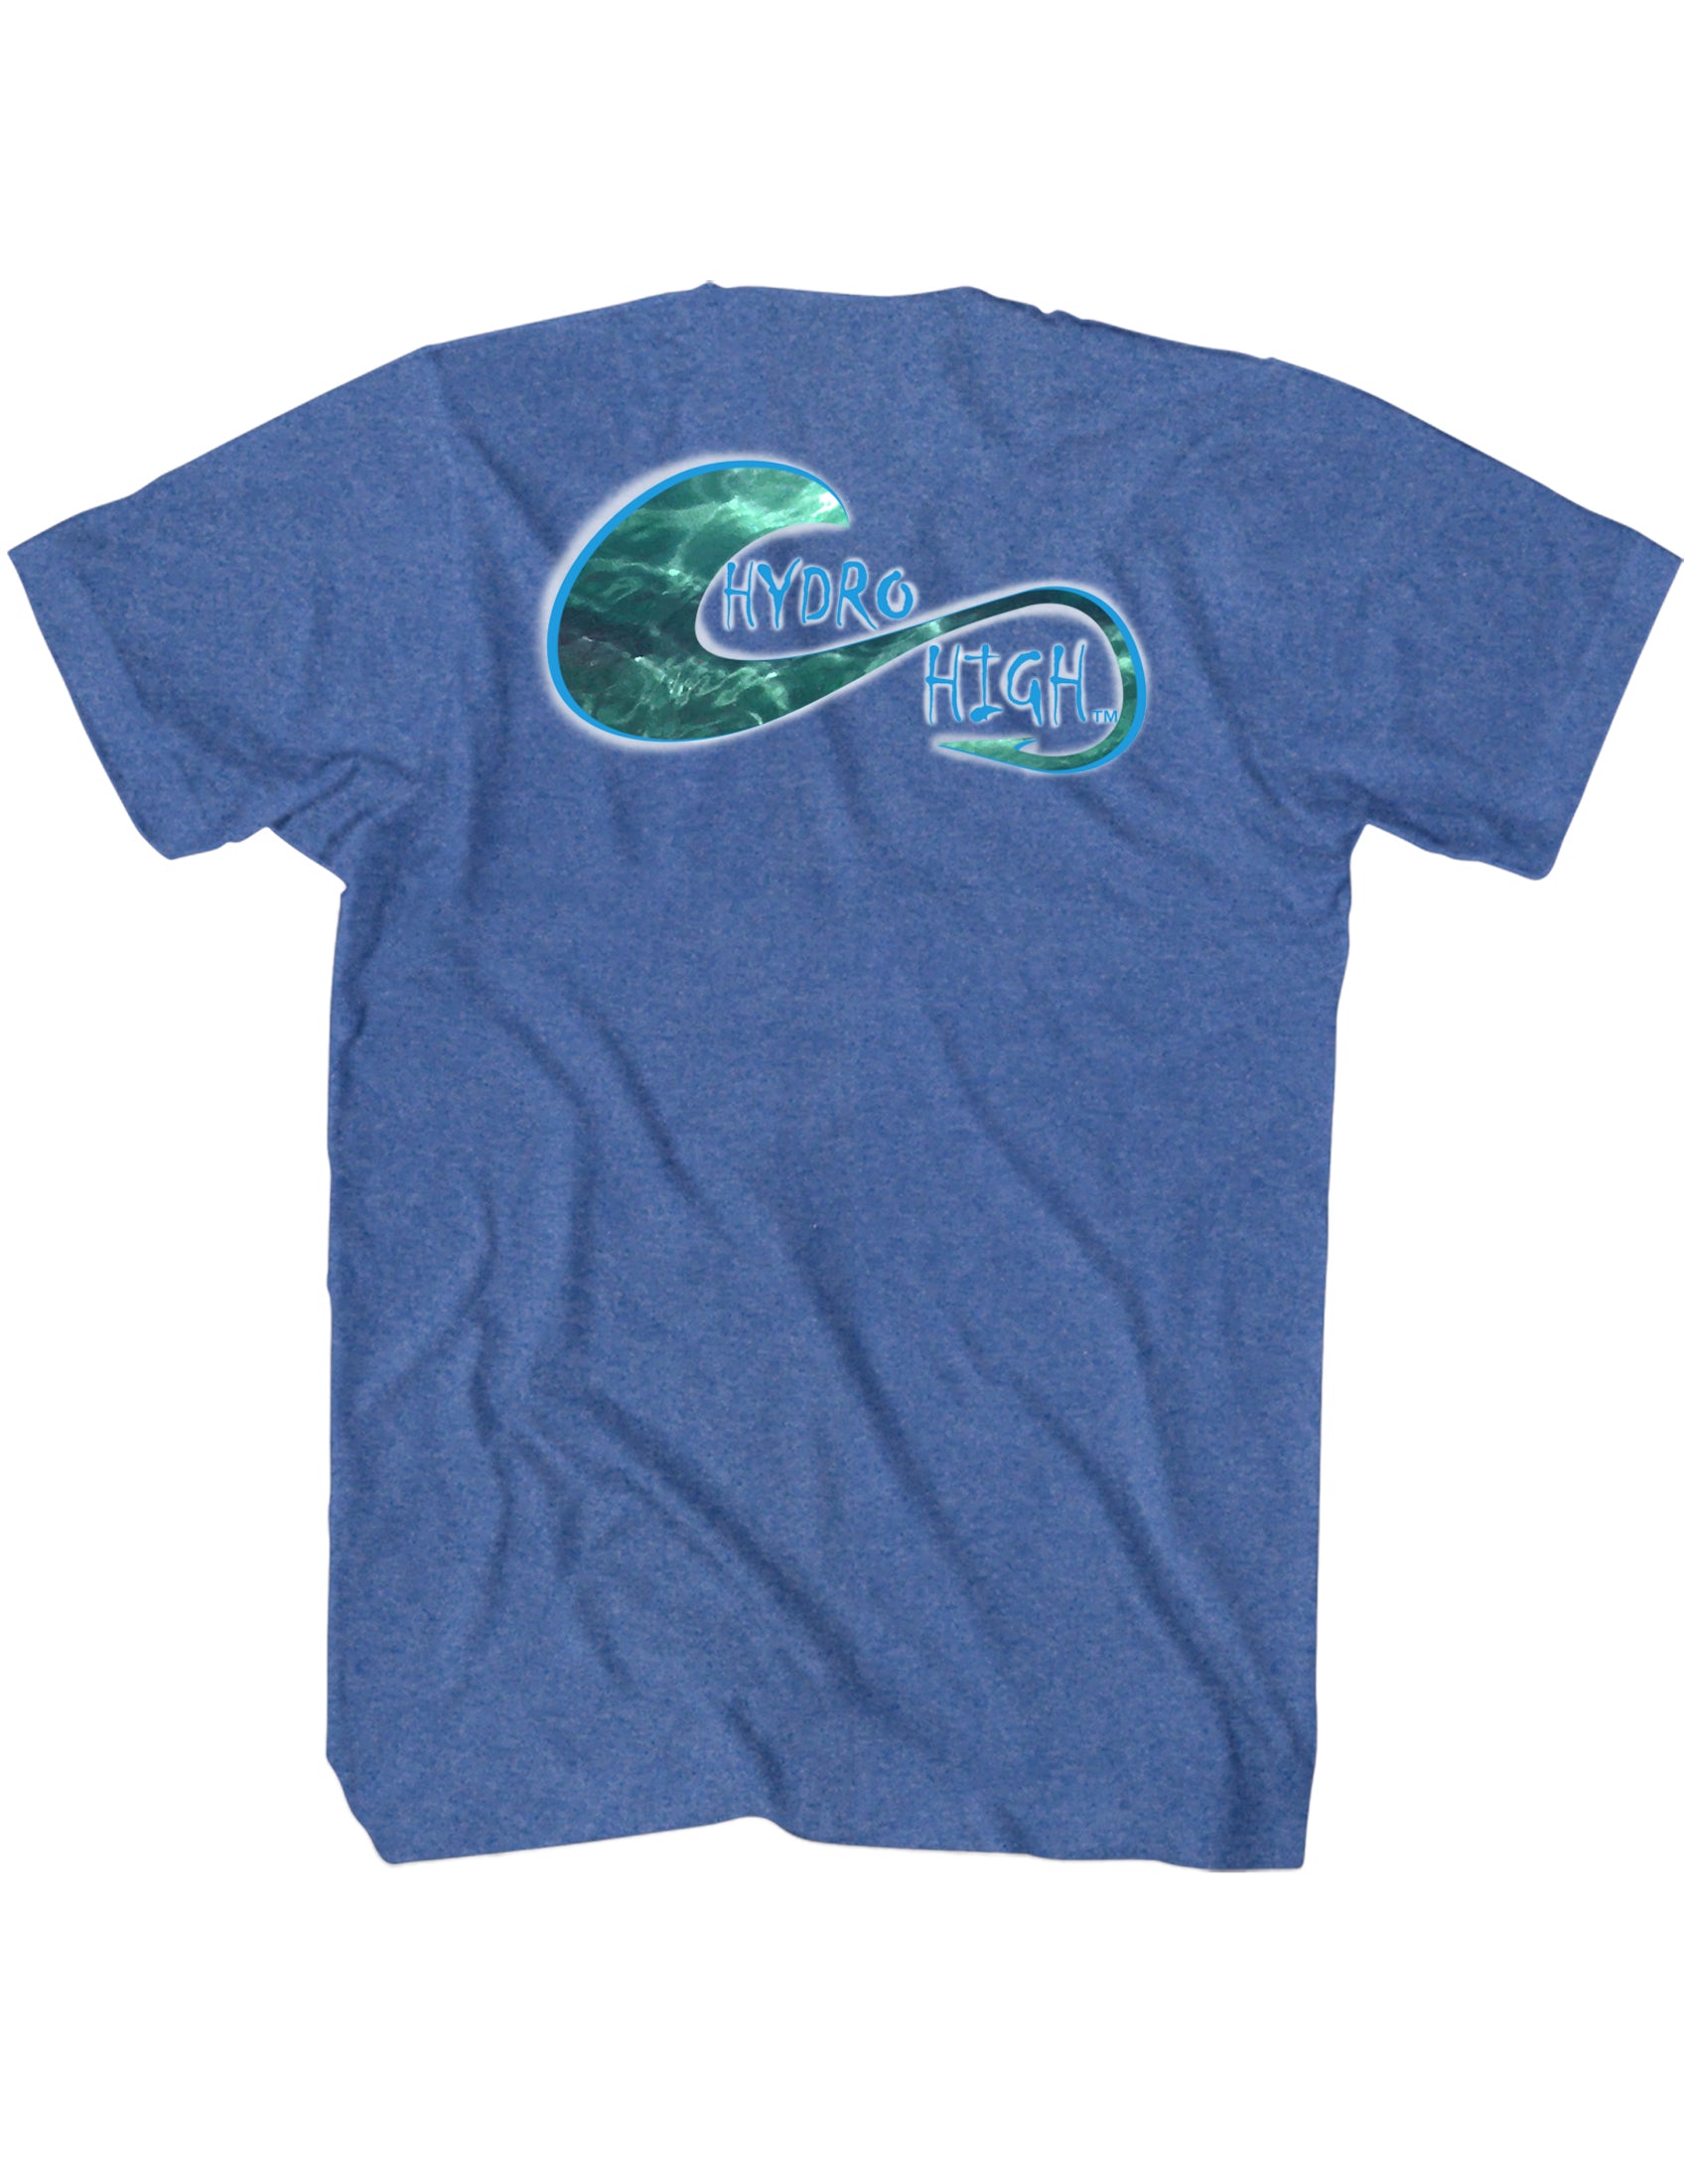 Hook & Wave Ocean Colors Logo T-Shirt Back Design – Hydro High